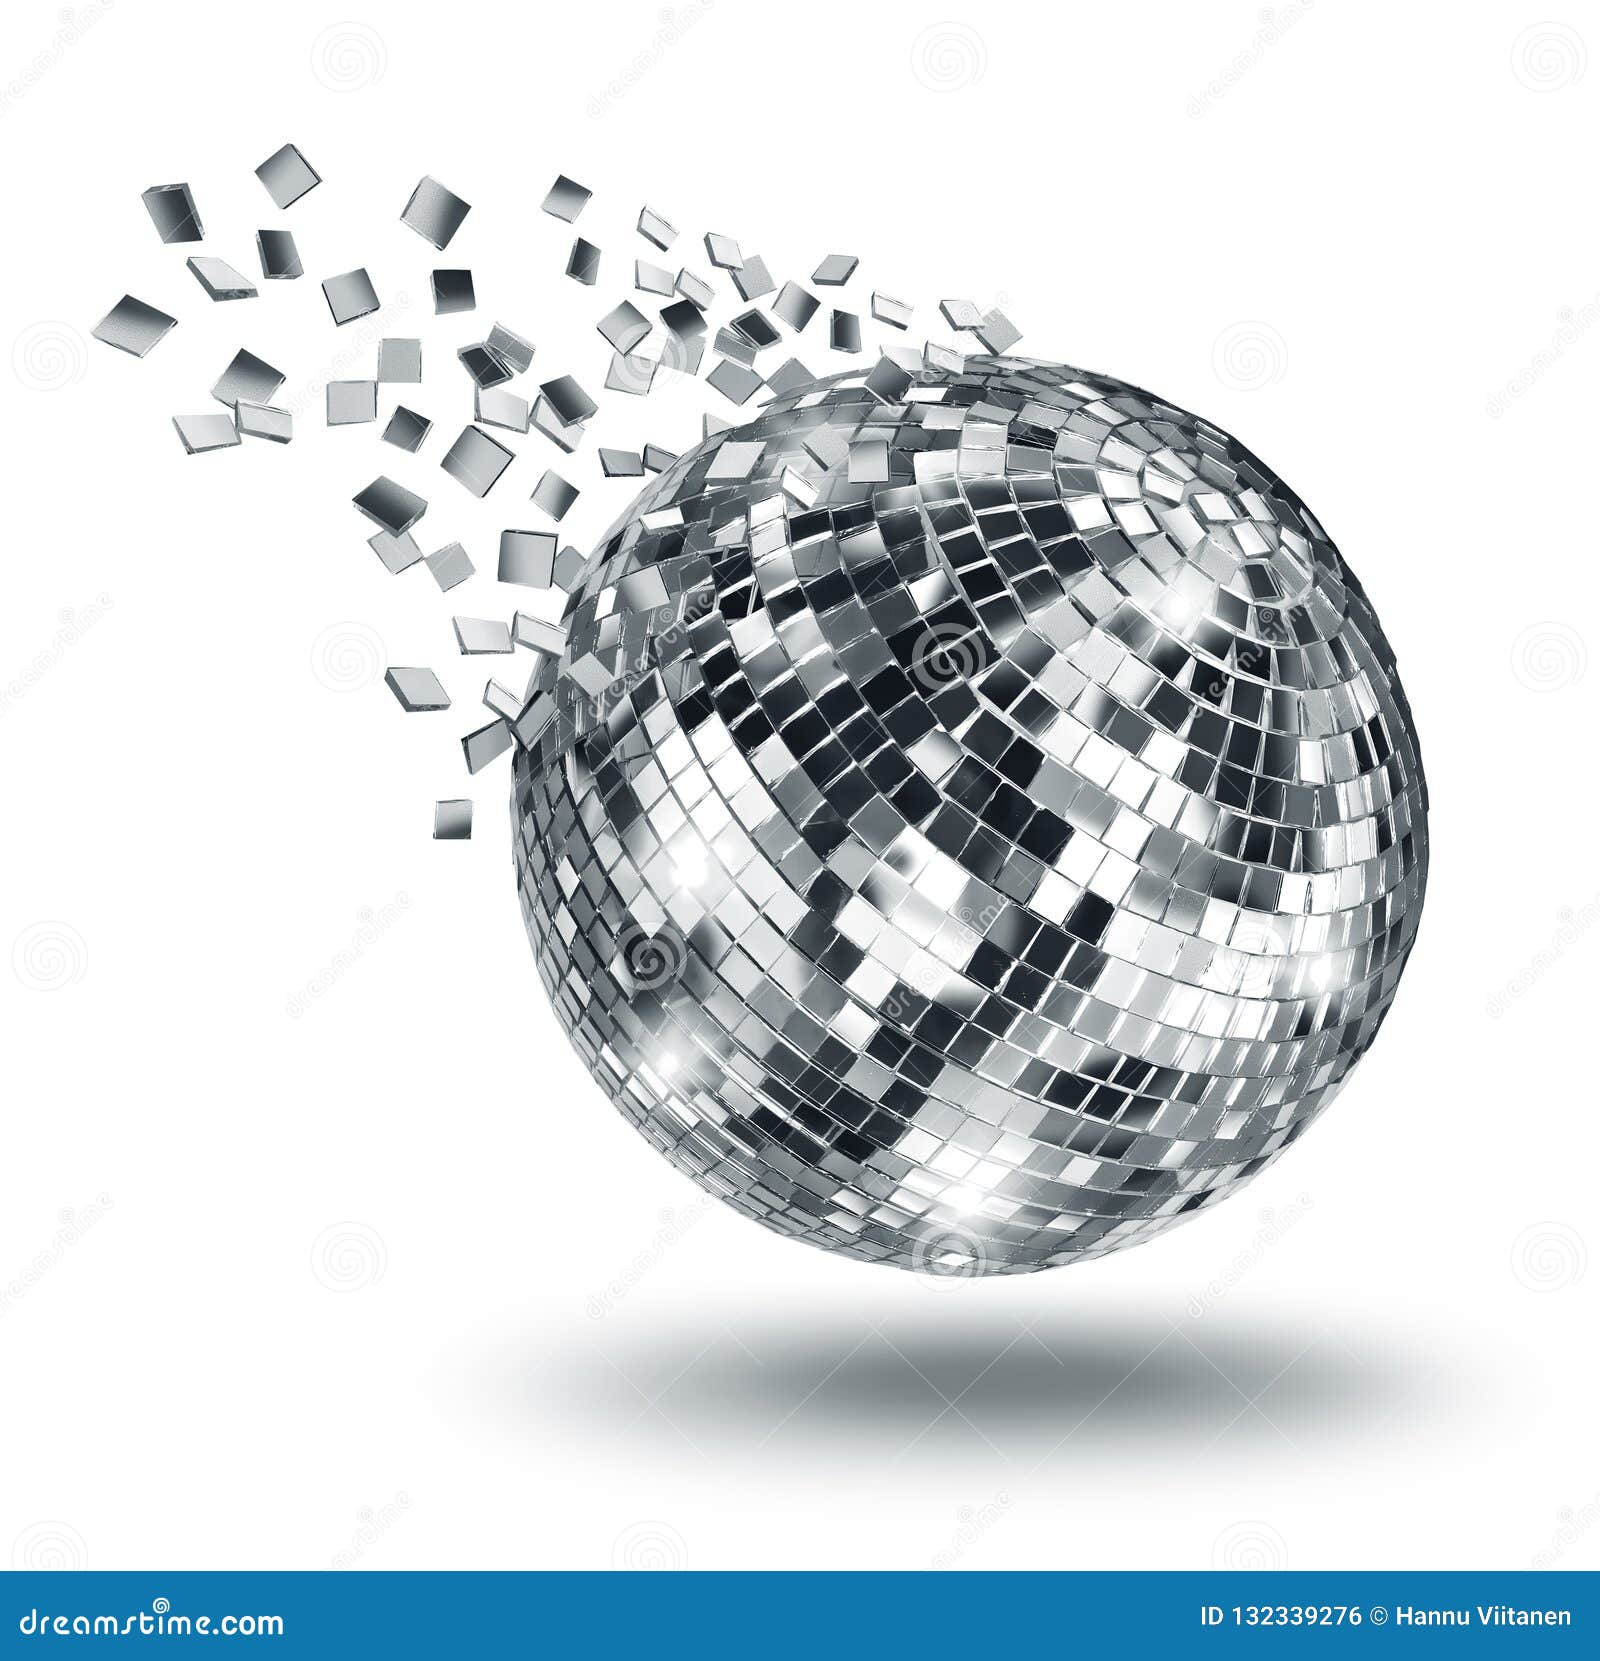 disco mirror ball breaking into silver fragments